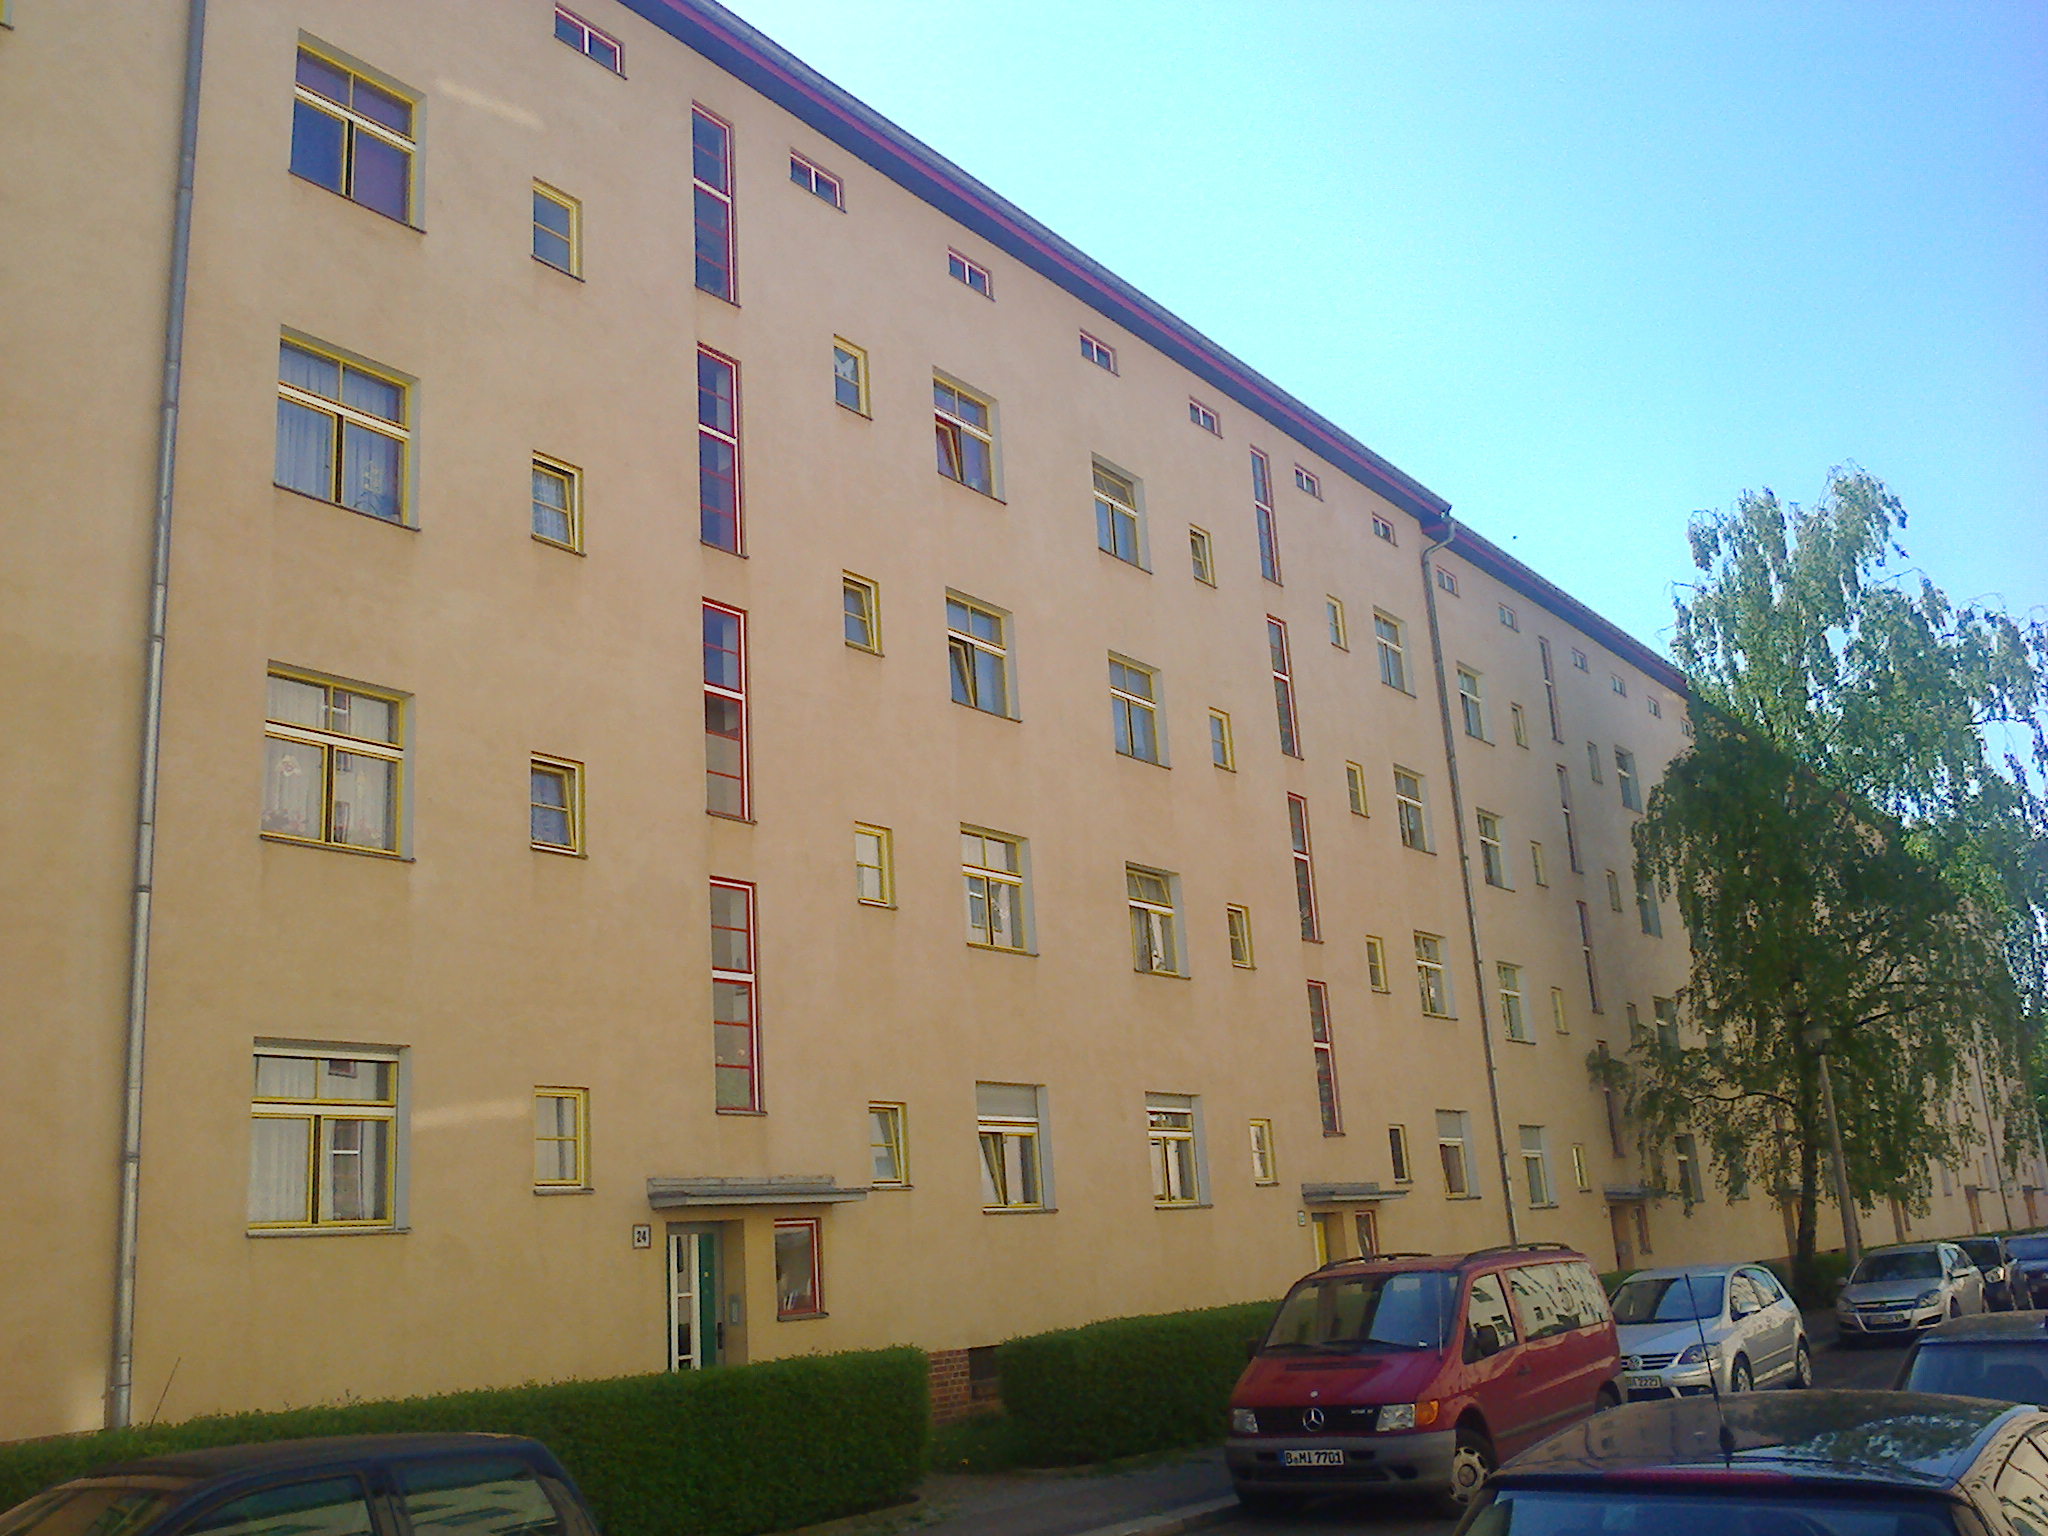 A Soviet era block with renovated façade in East Berlin